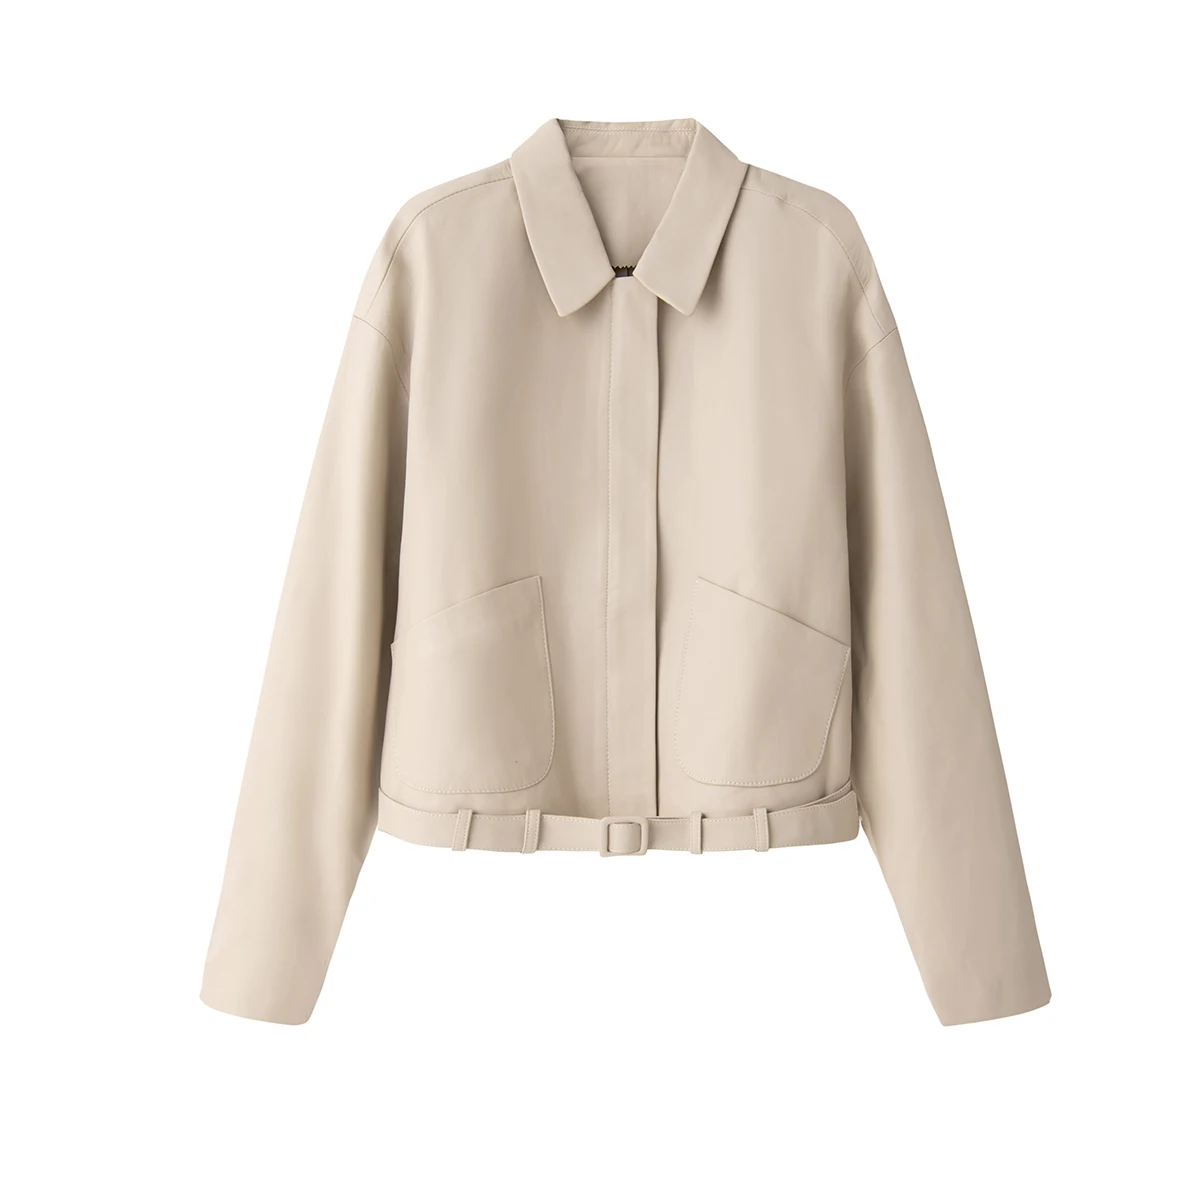 Sheepskin Leather Jacket Women High-quality  Pockets  Zipper  High Street  Turn-down Collar  Spring/Summer Crop Top enlarge